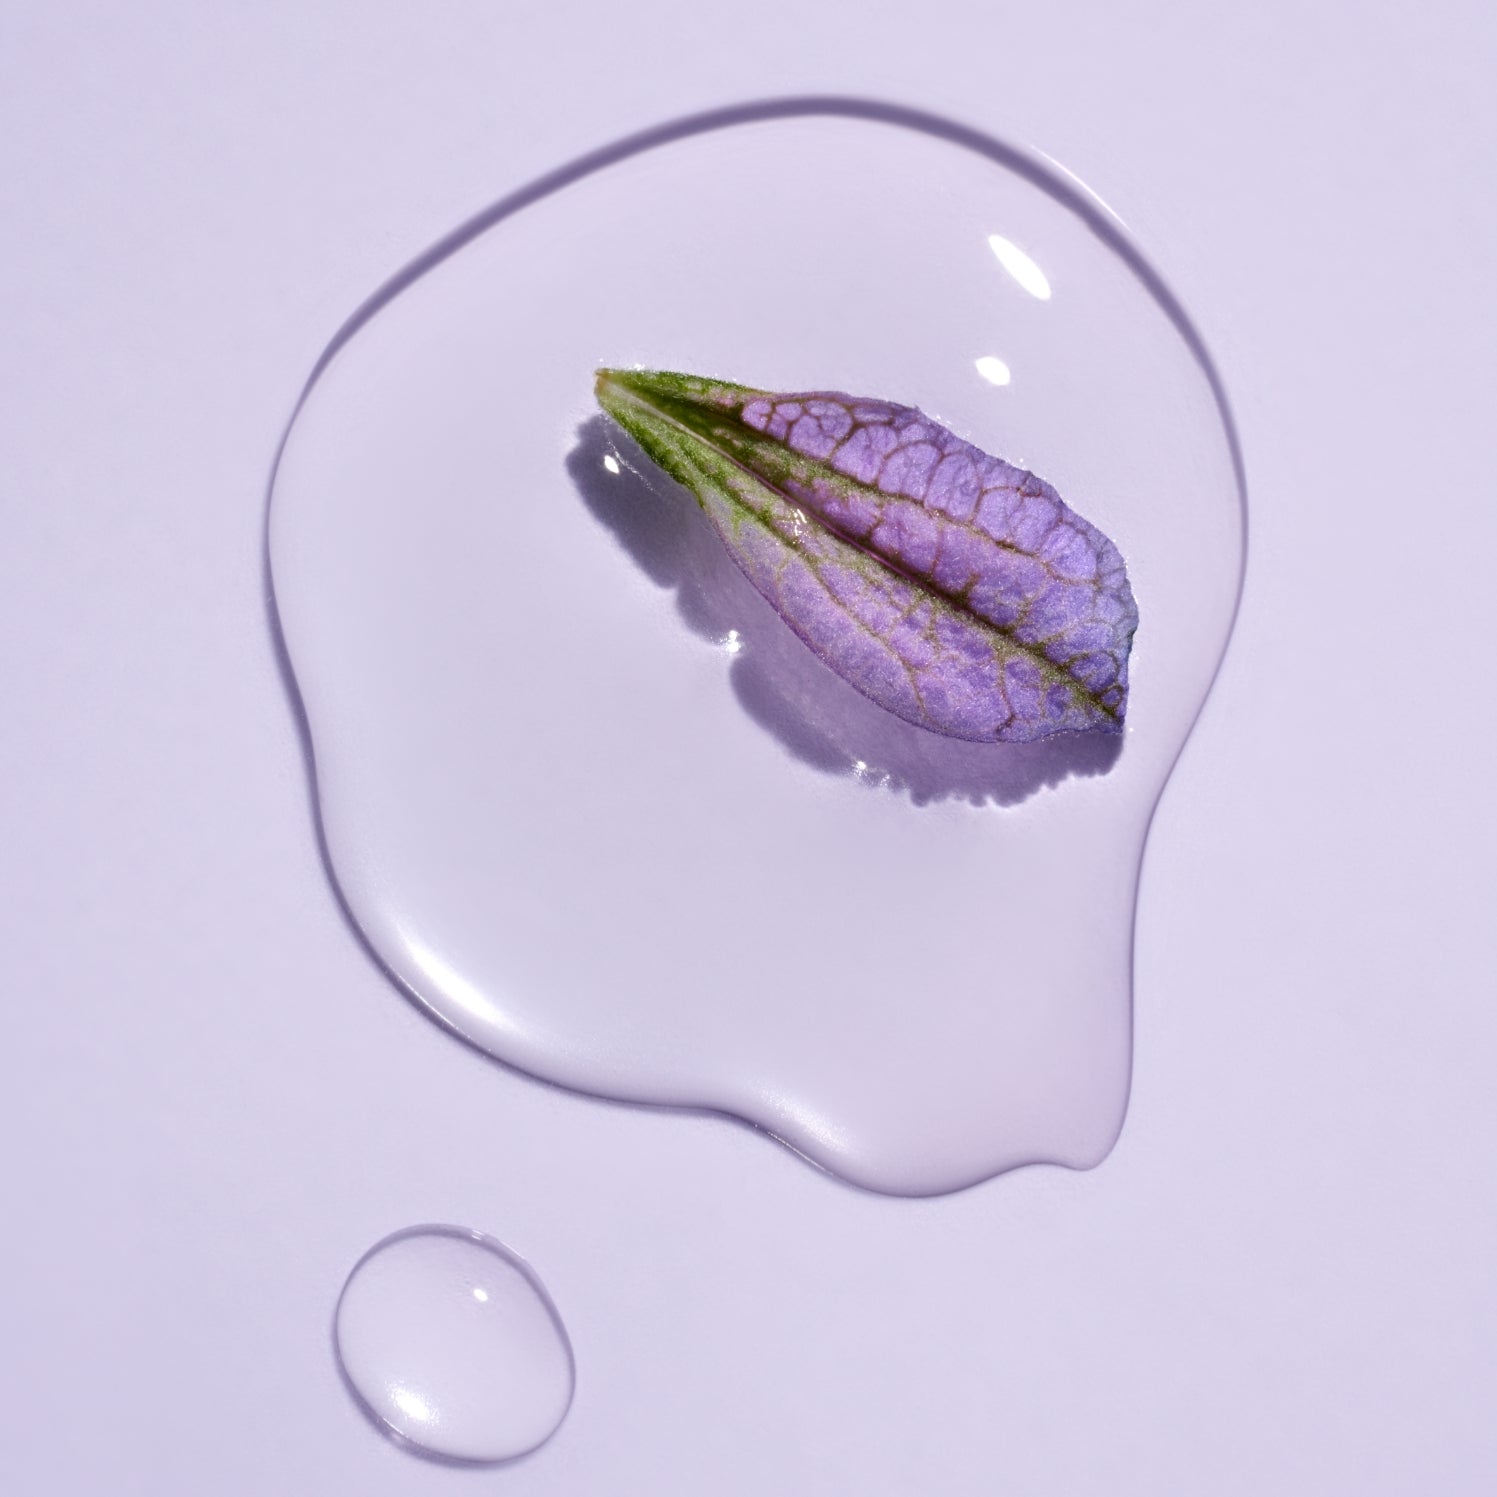 Close-up of jelly-like Bakuchiol Retinol Alternative Serum with purple plant on top